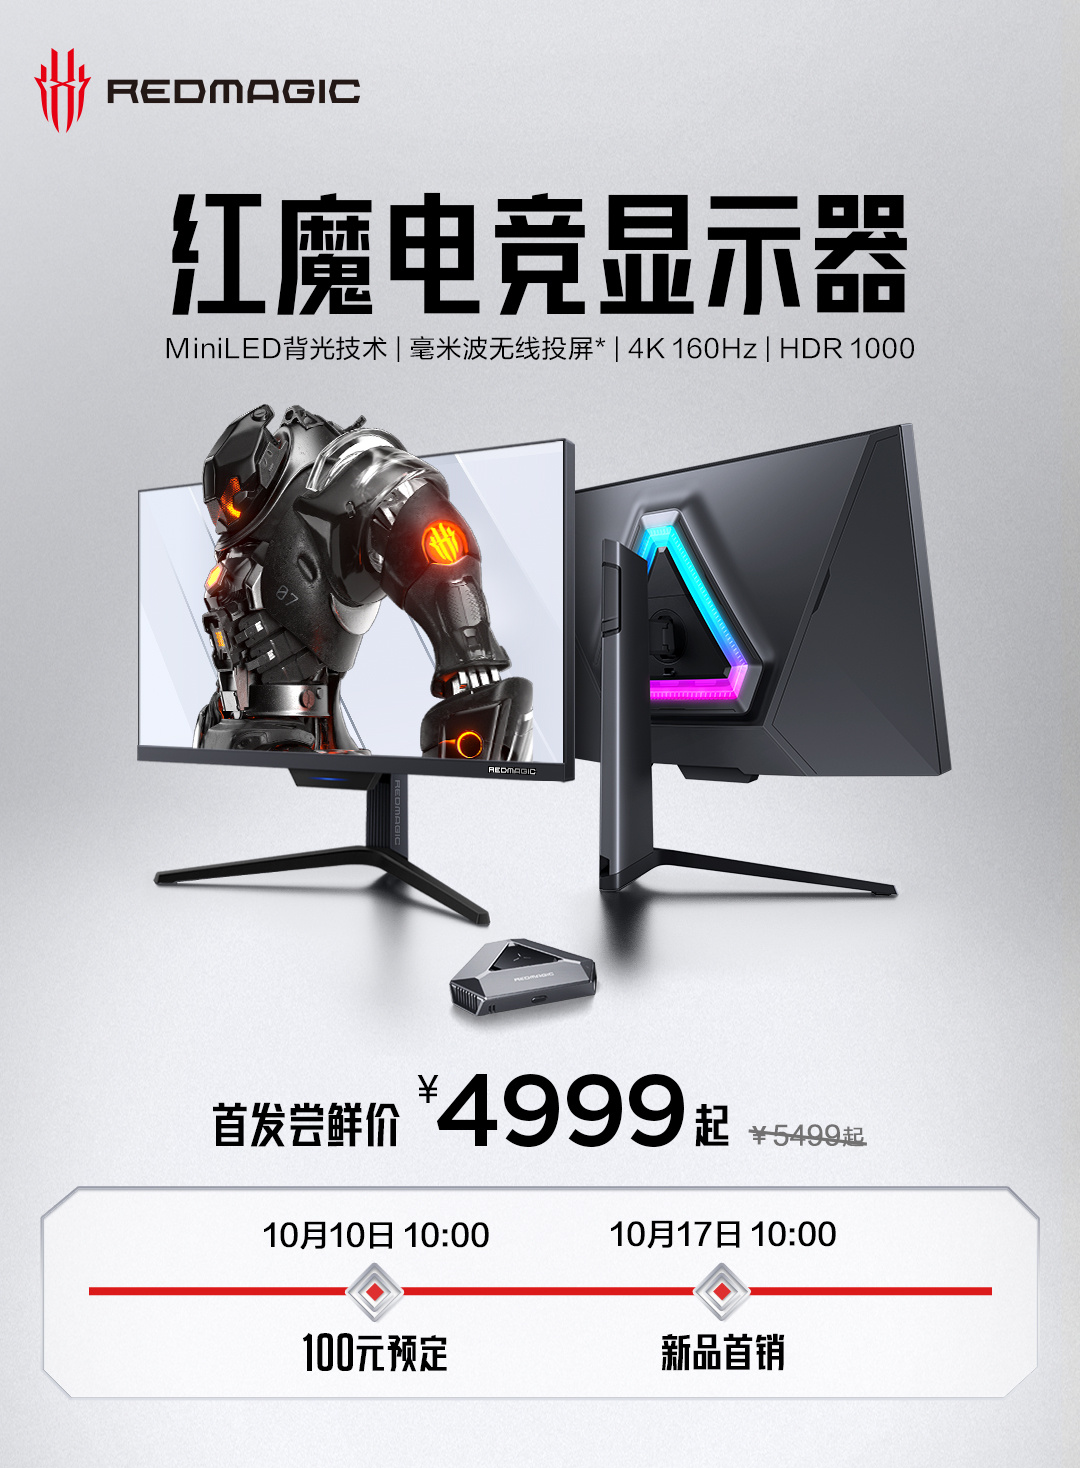 Red Magic 4K Gaming Monitor Pre-Order in China